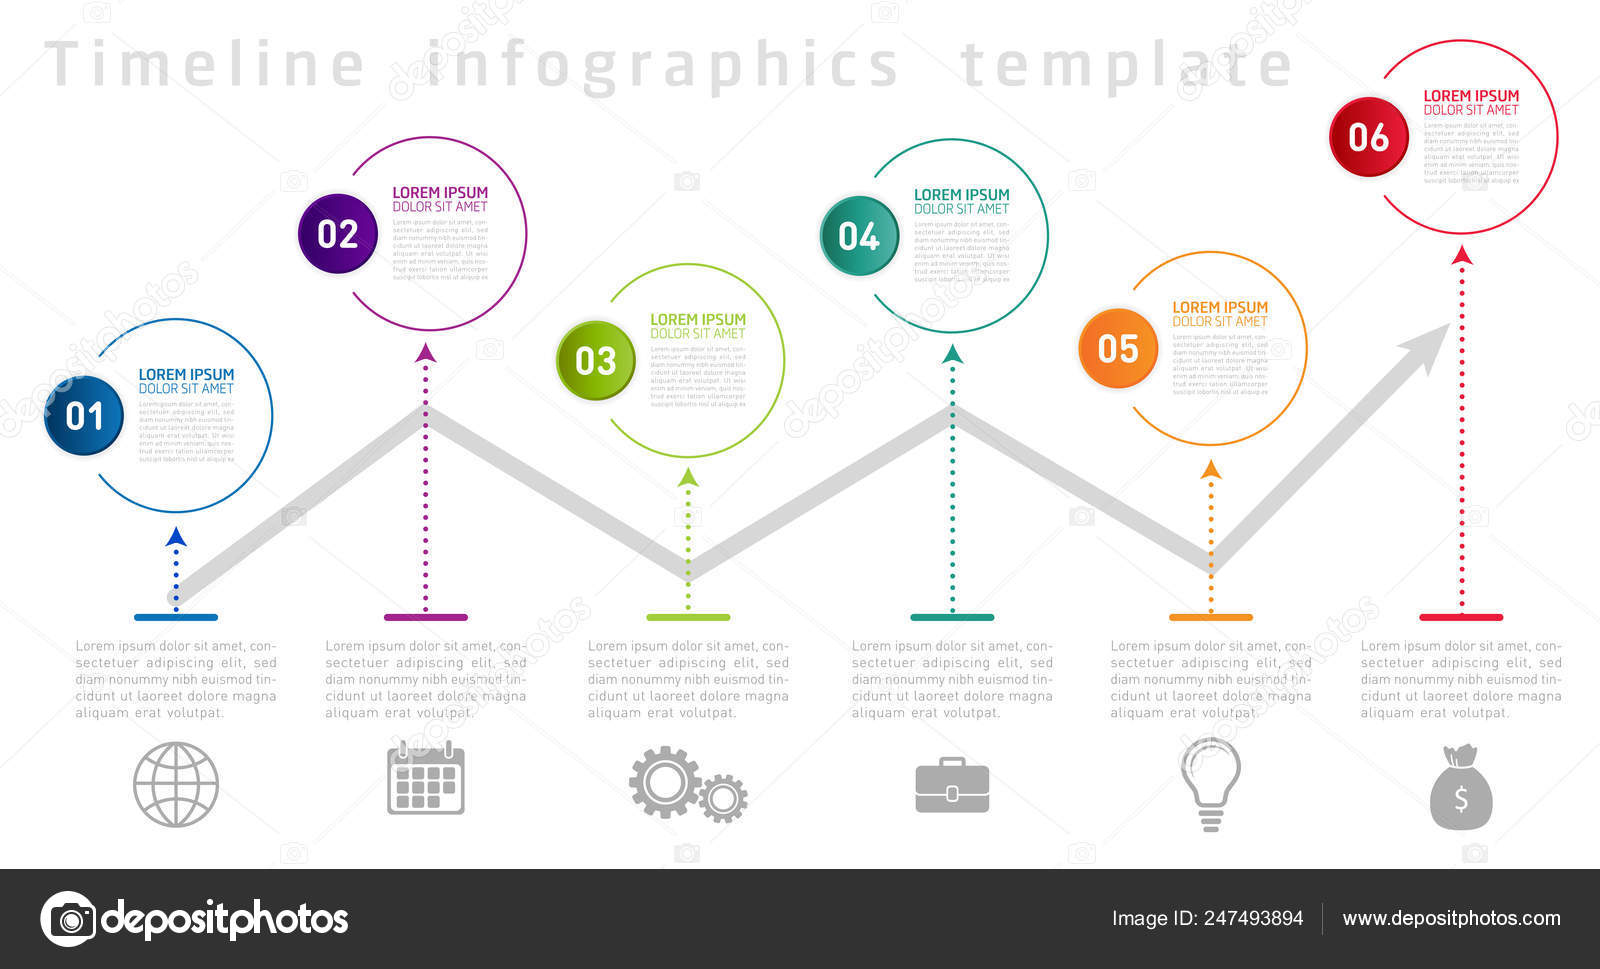 Timeline Infographic Design Template Vector Illustration Stock Vector C Peppers 247493894,Diy Bunk Bed Design Plans